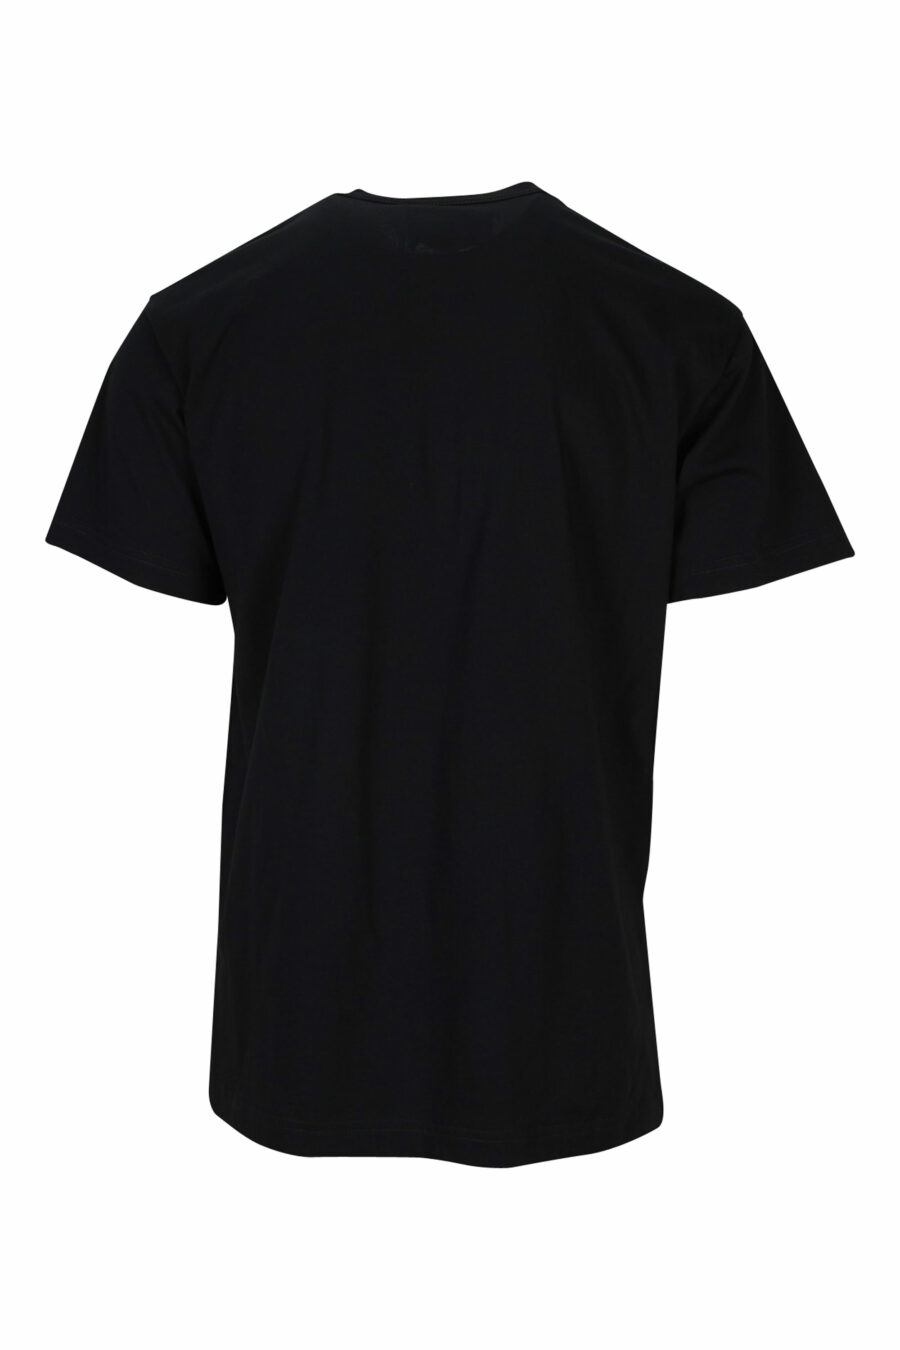 T-shirt noir avec logo maxillaire baroque multicolore - 8052019504057 1 1 1